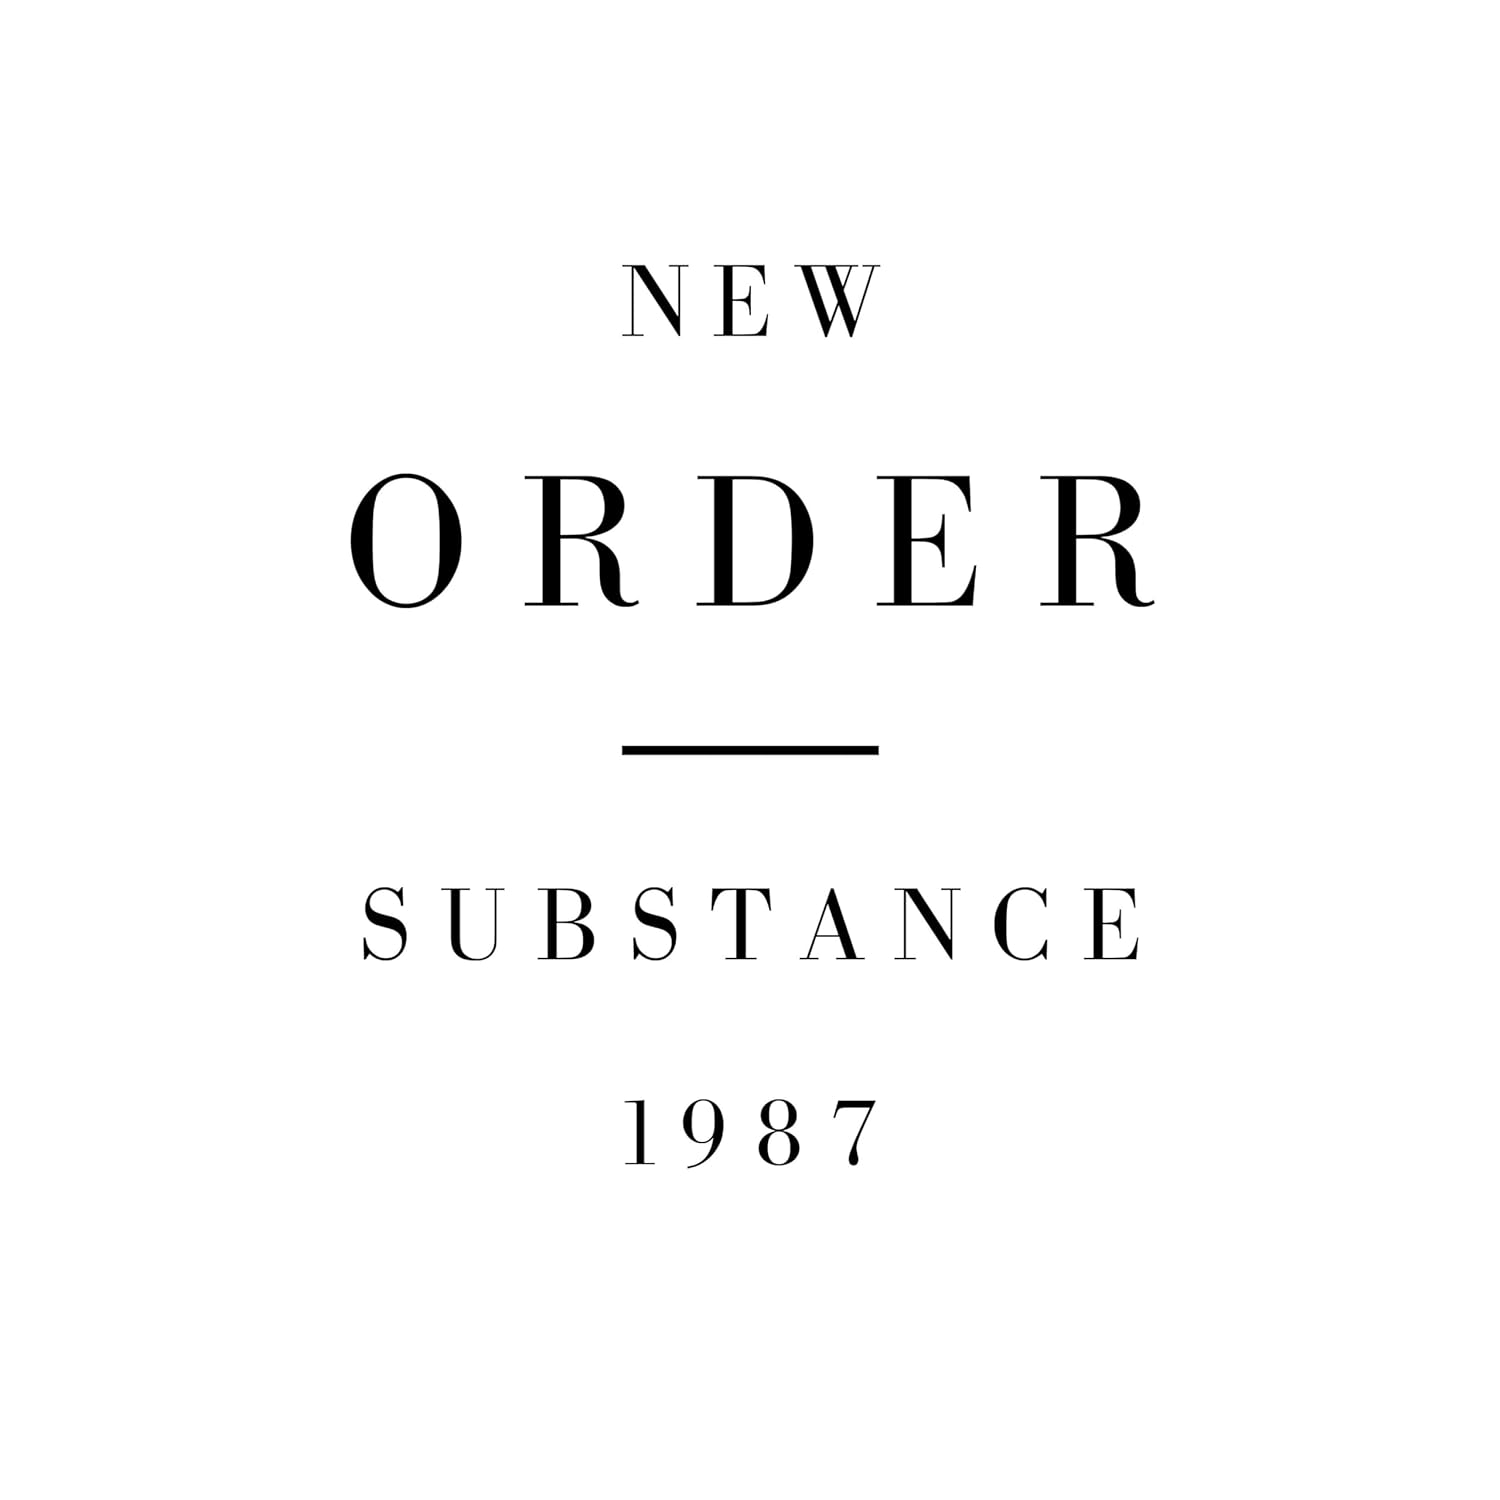 New Order - Substance